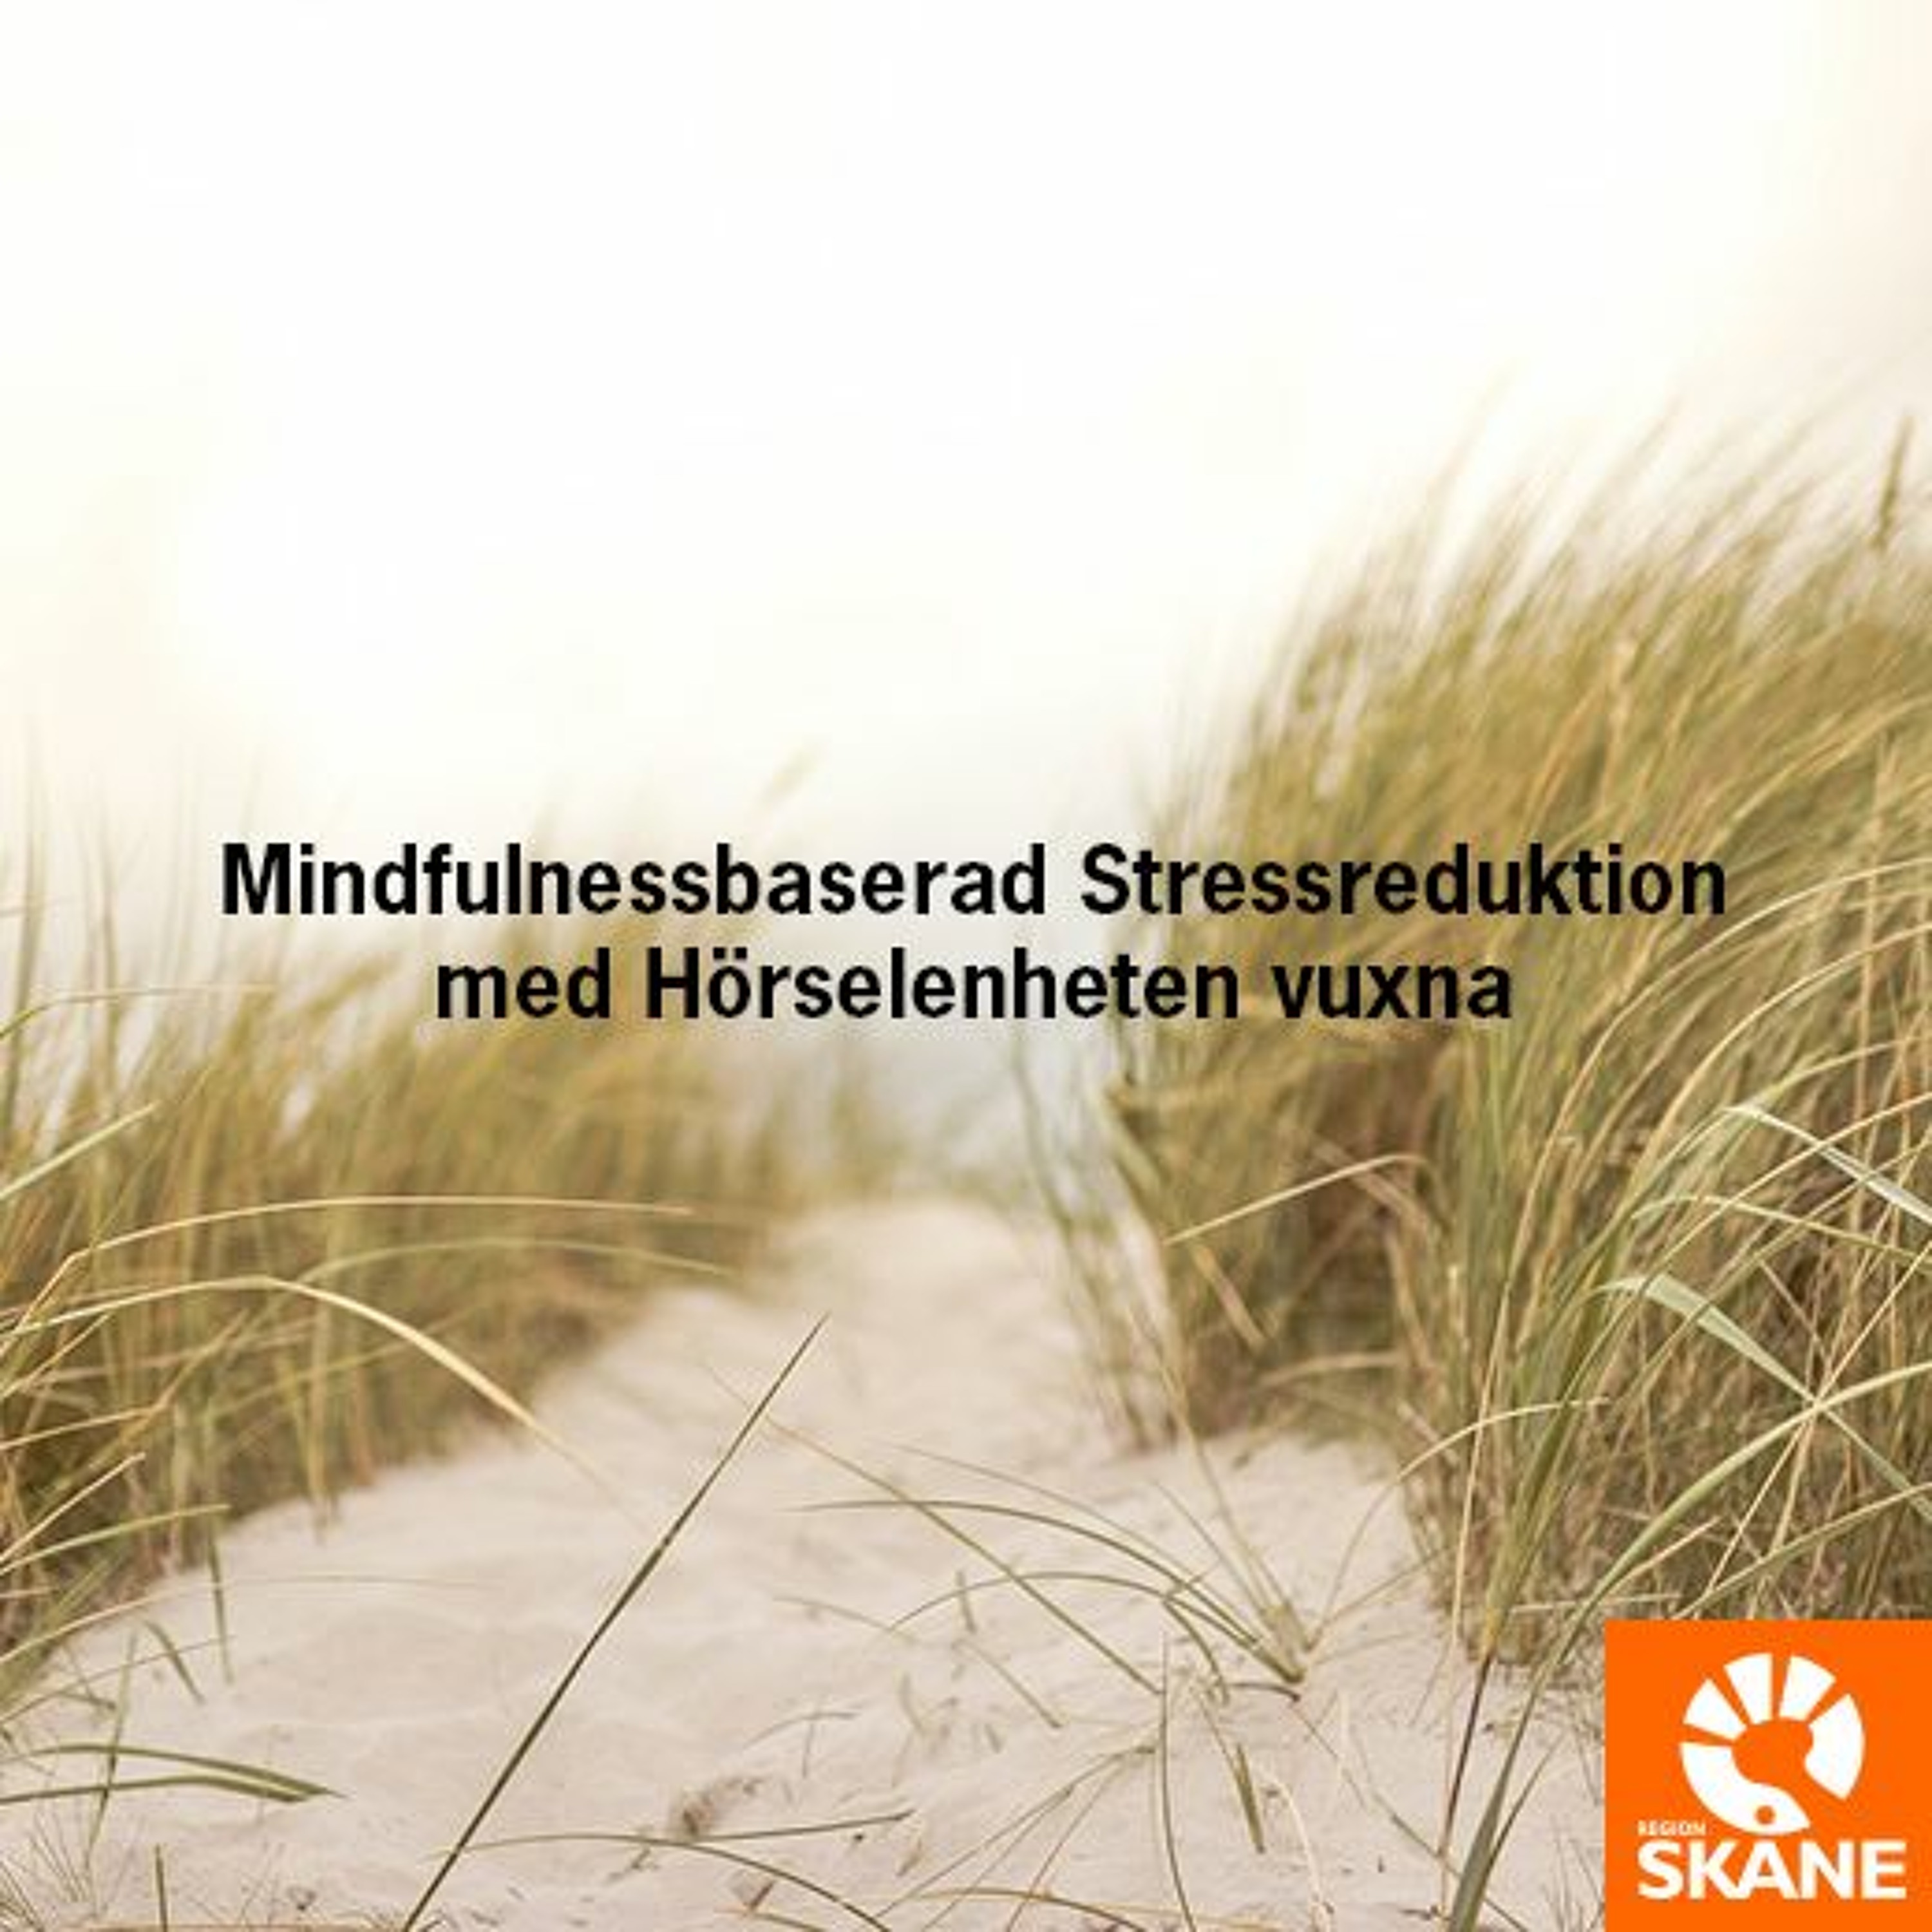 Mindfulnessbaserad Stressreduktion - Introduktion till Kroppsskanning